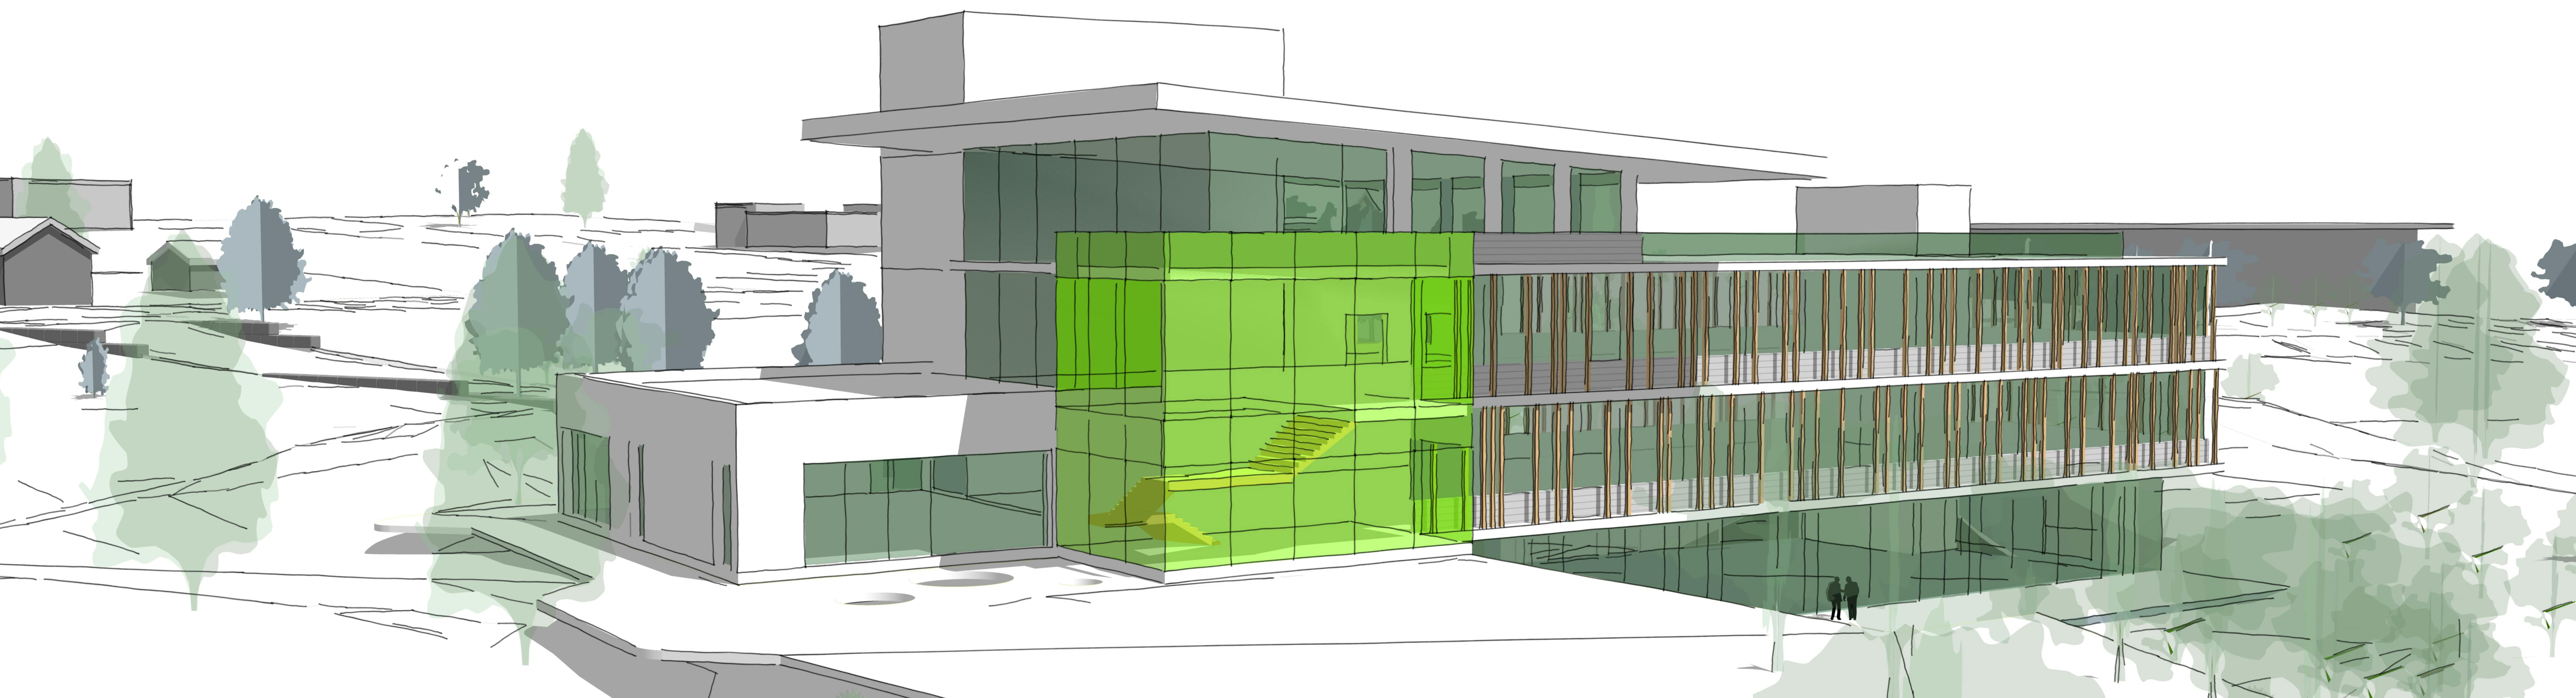 City Hall/Library Building Concept Sketch